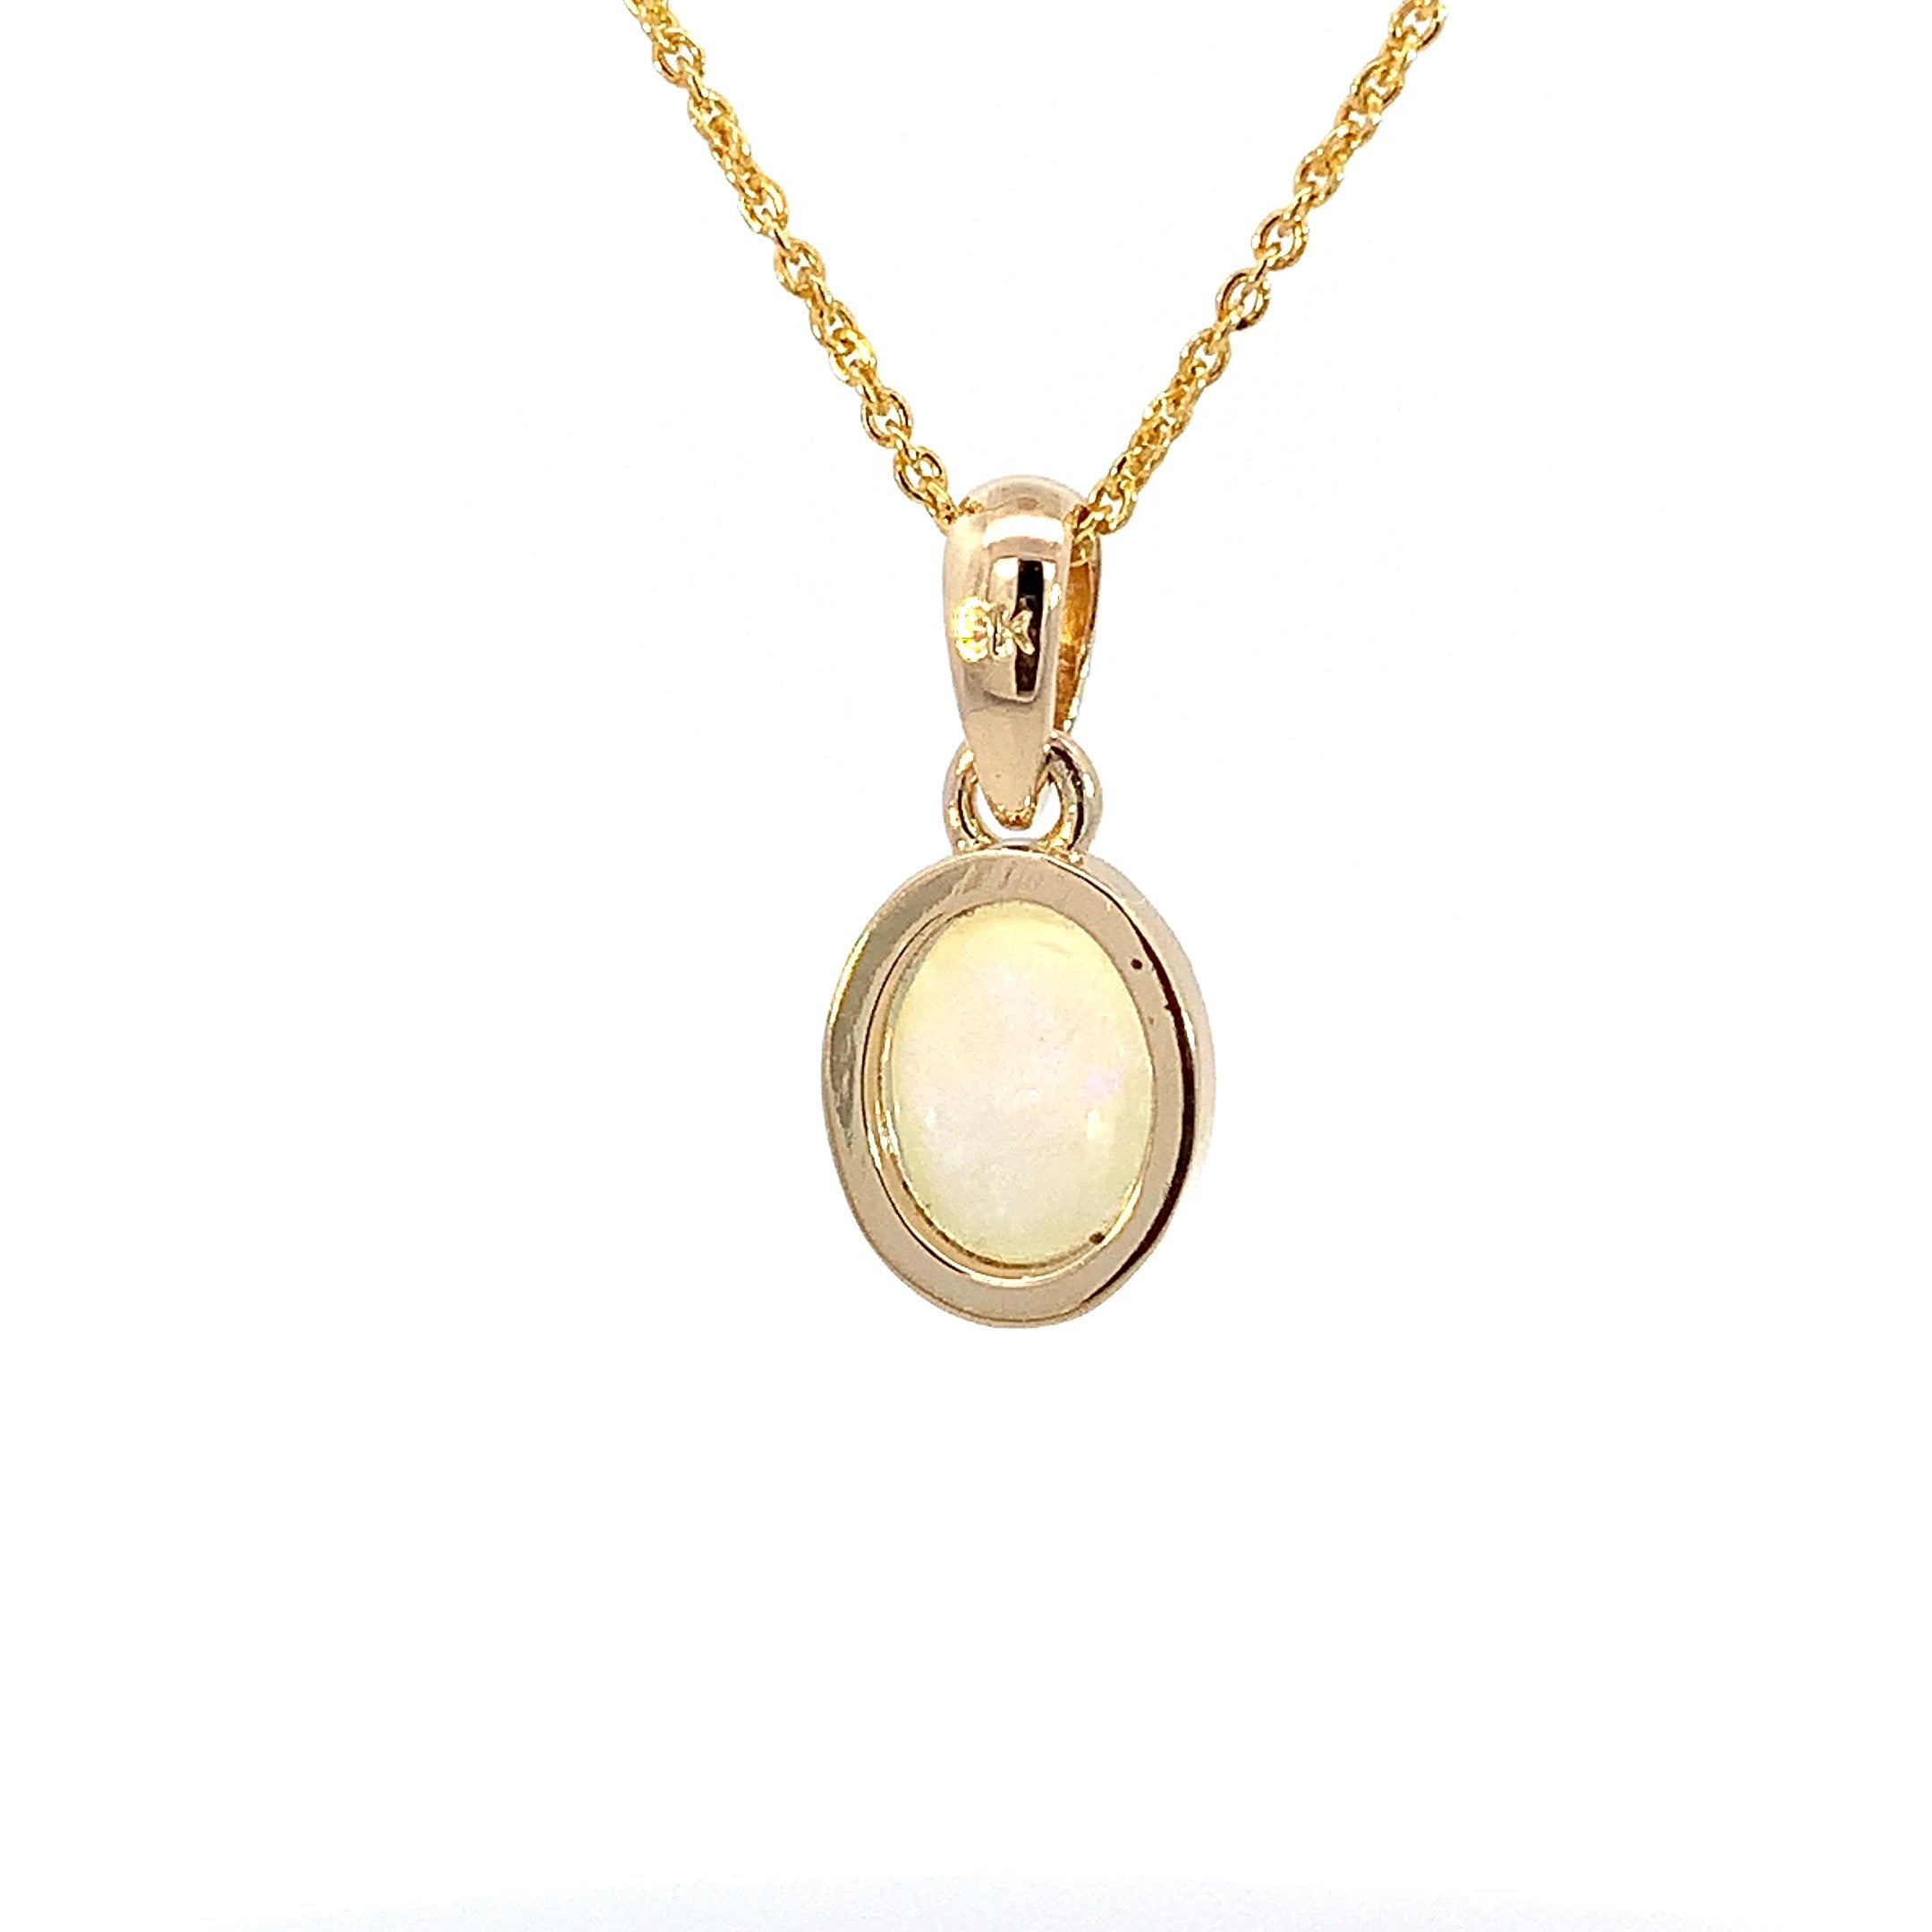 9kt Yellow Gold bezel set 8x6mm Light Opal pendant - Masterpiece Jewellery Opal & Gems Sydney Australia | Online Shop